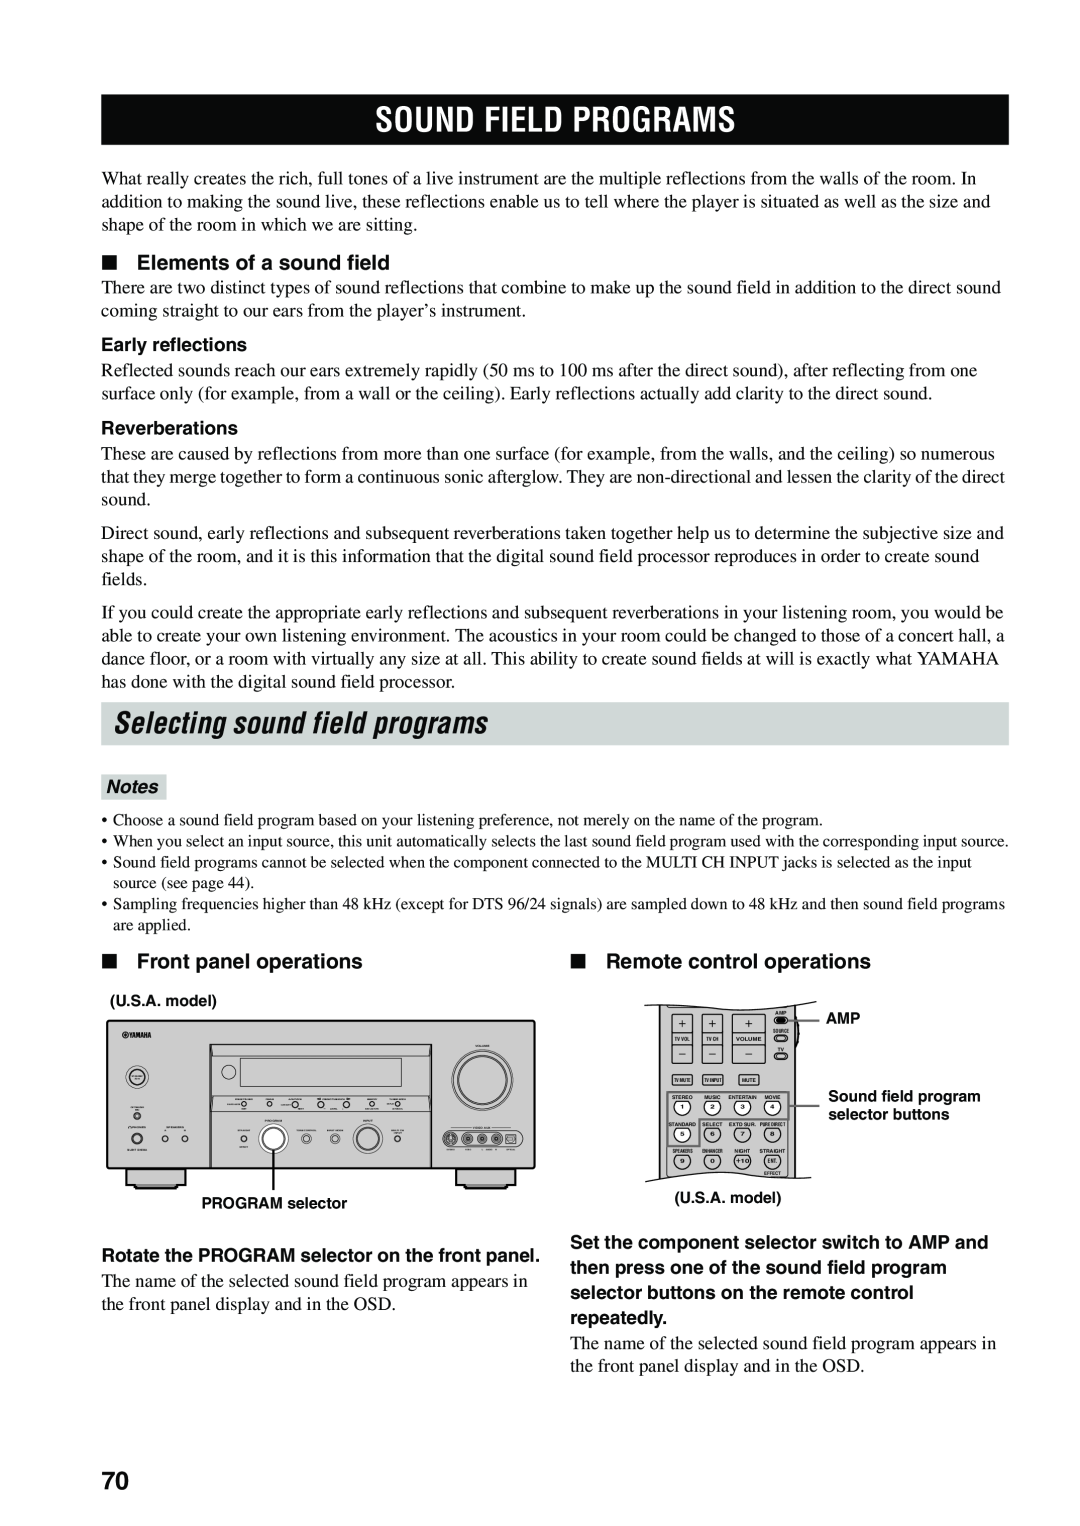 Yamaha HTR-5960 Sound Field Programs, Selecting sound field programs, Elements of a sound field, Front panel operations 